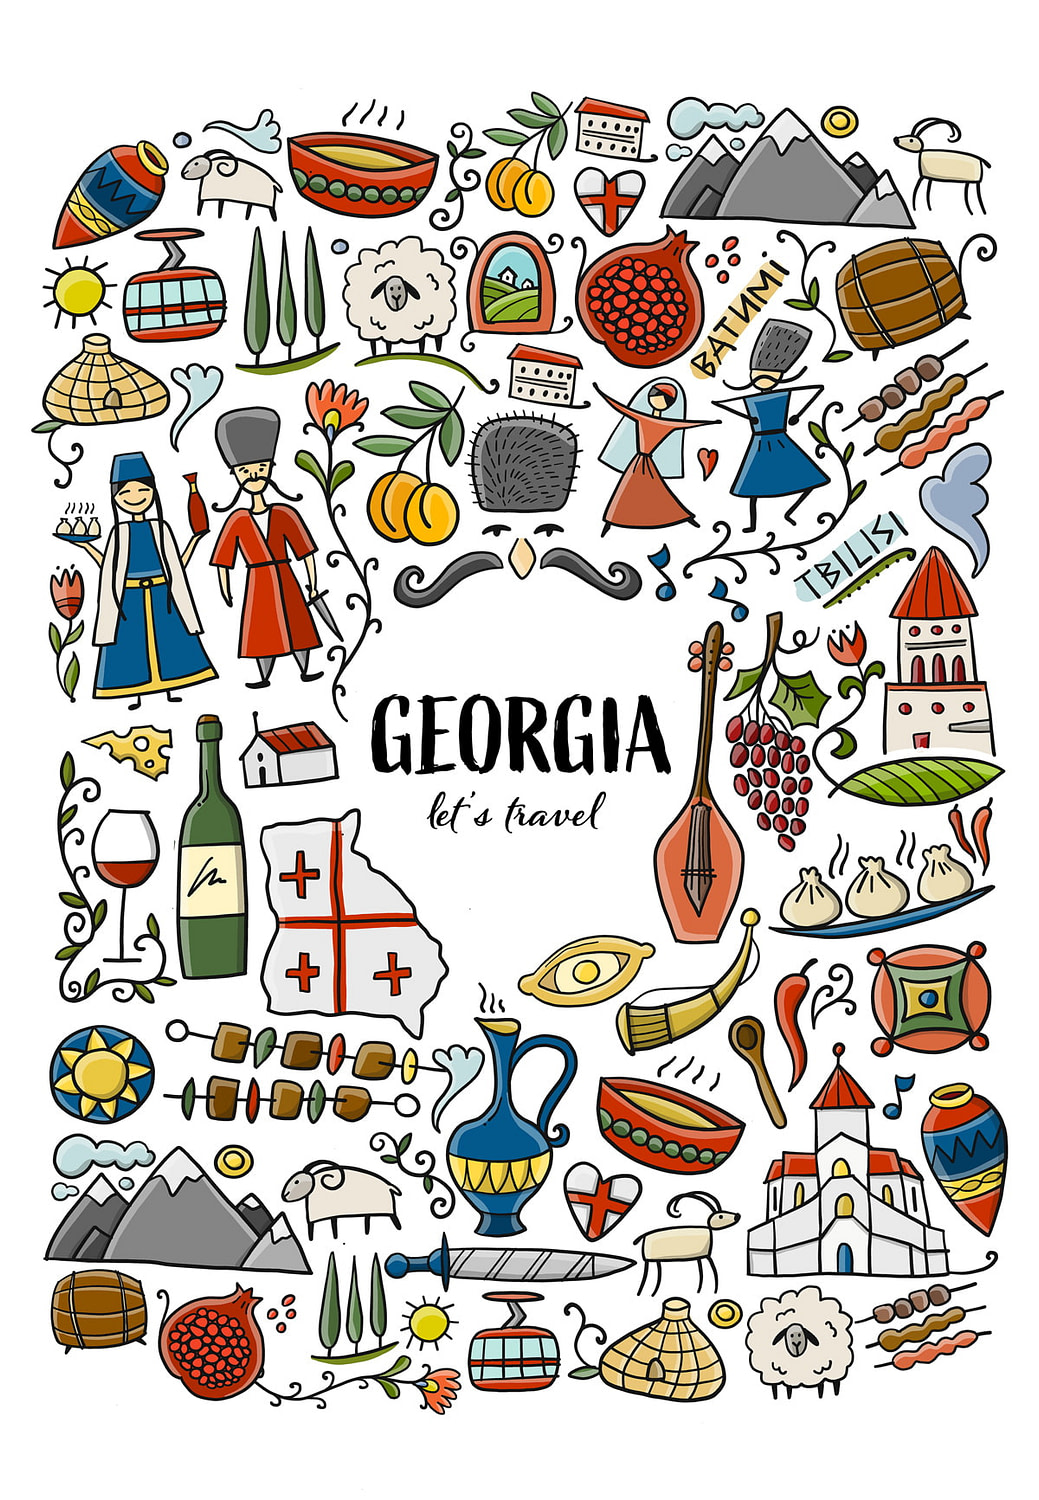 Georgia country illustration